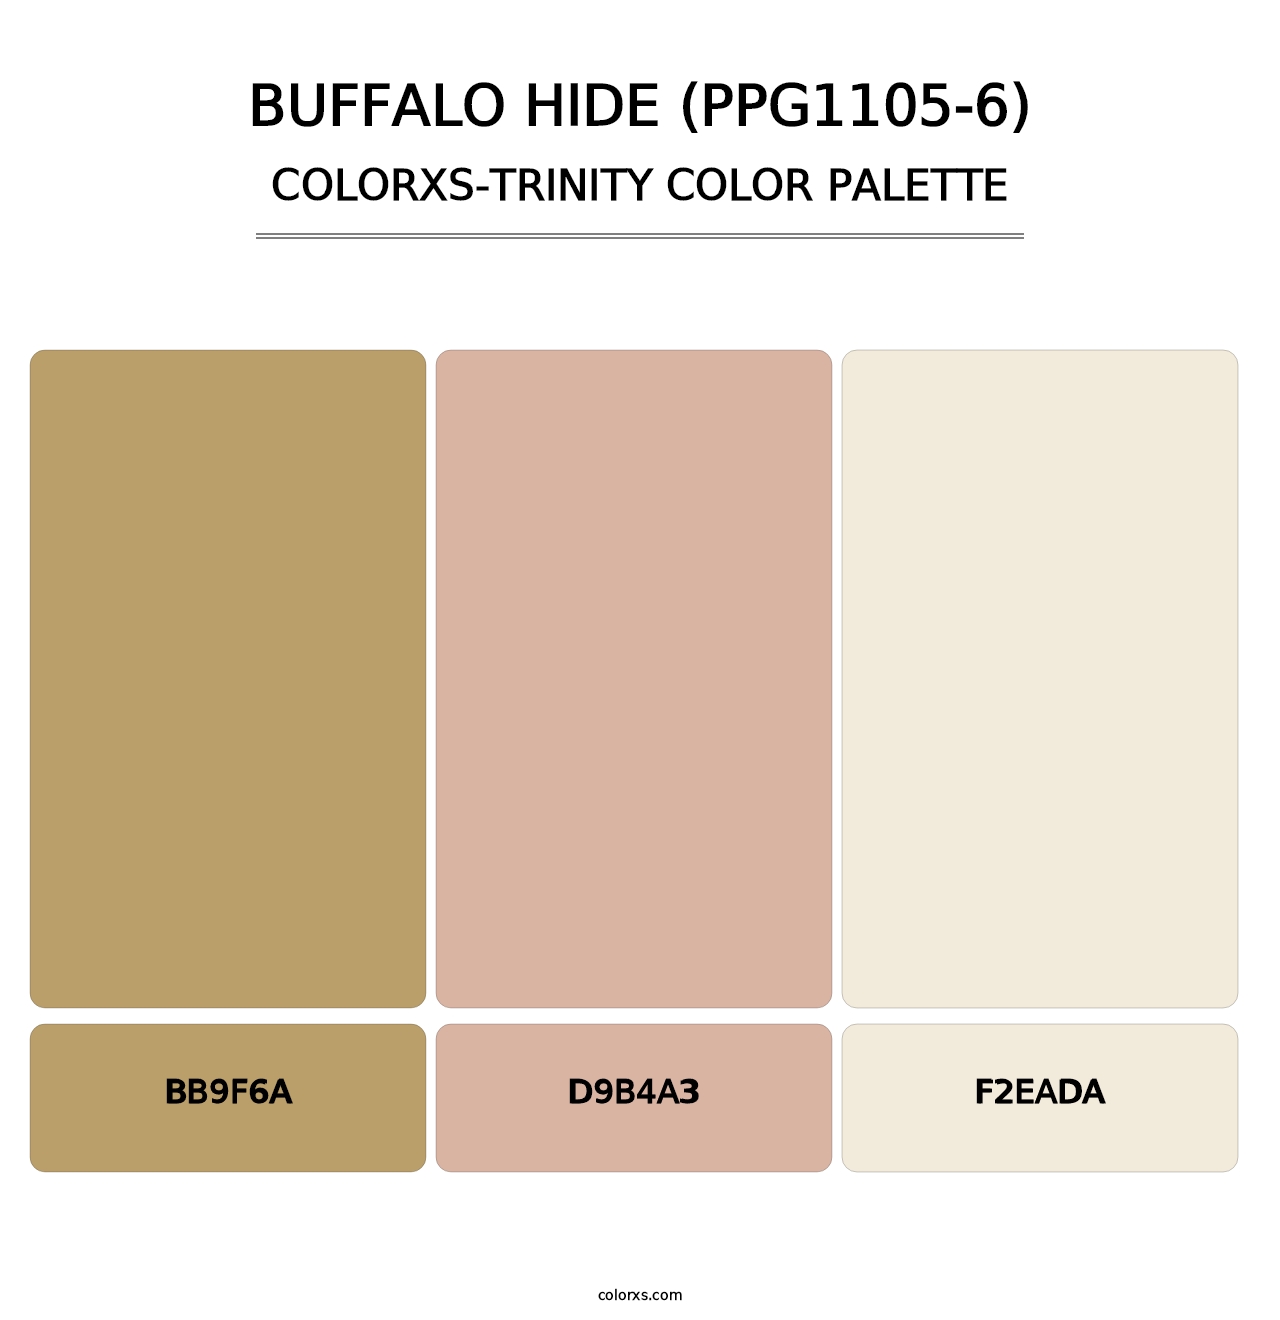 Buffalo Hide (PPG1105-6) - Colorxs Trinity Palette